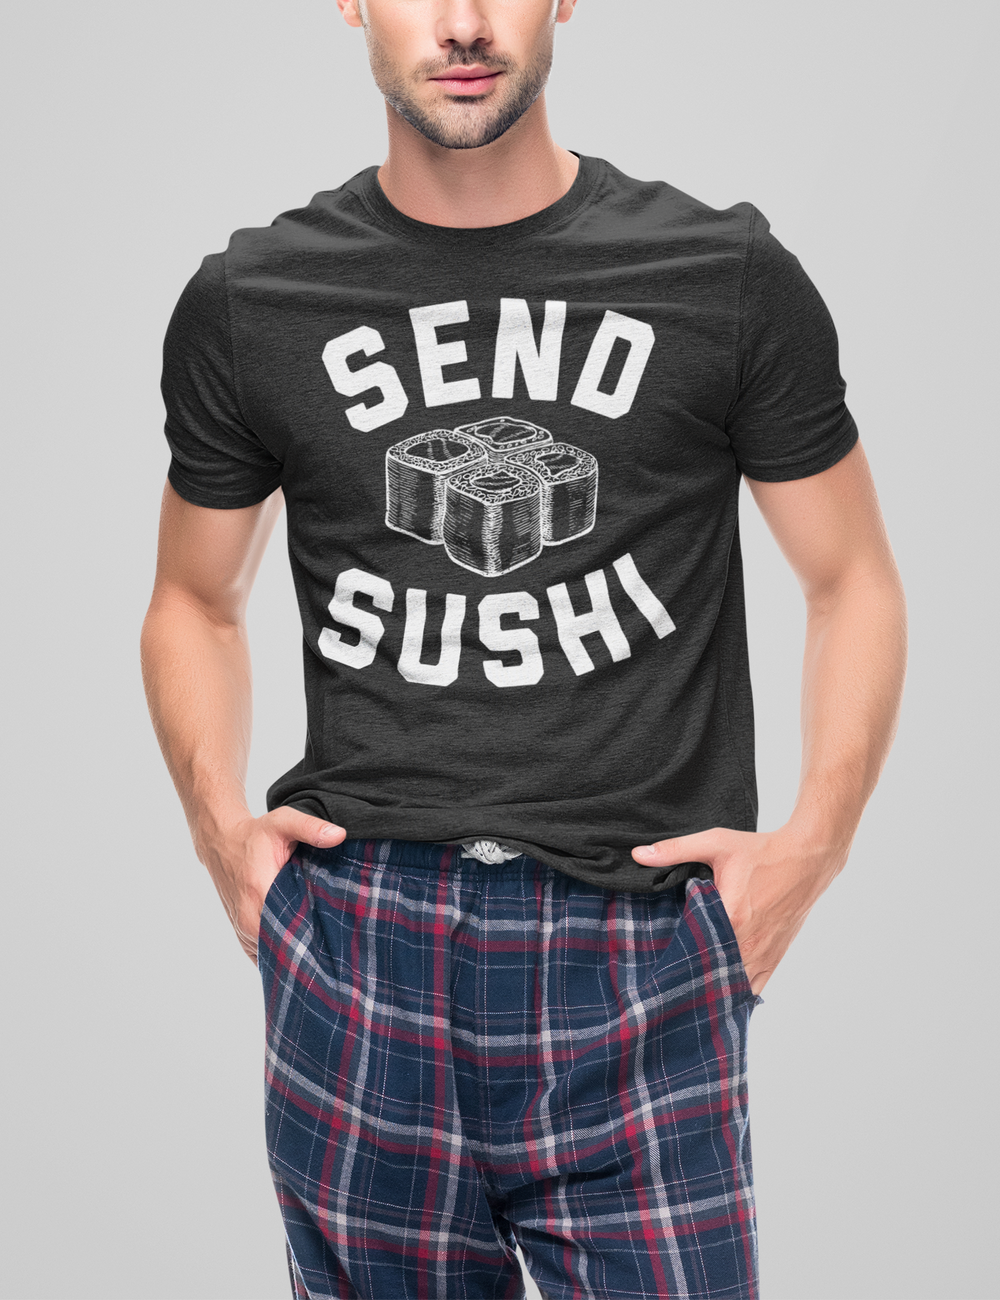 Send Sushi | Tri-Blend T-Shirt OniTakai